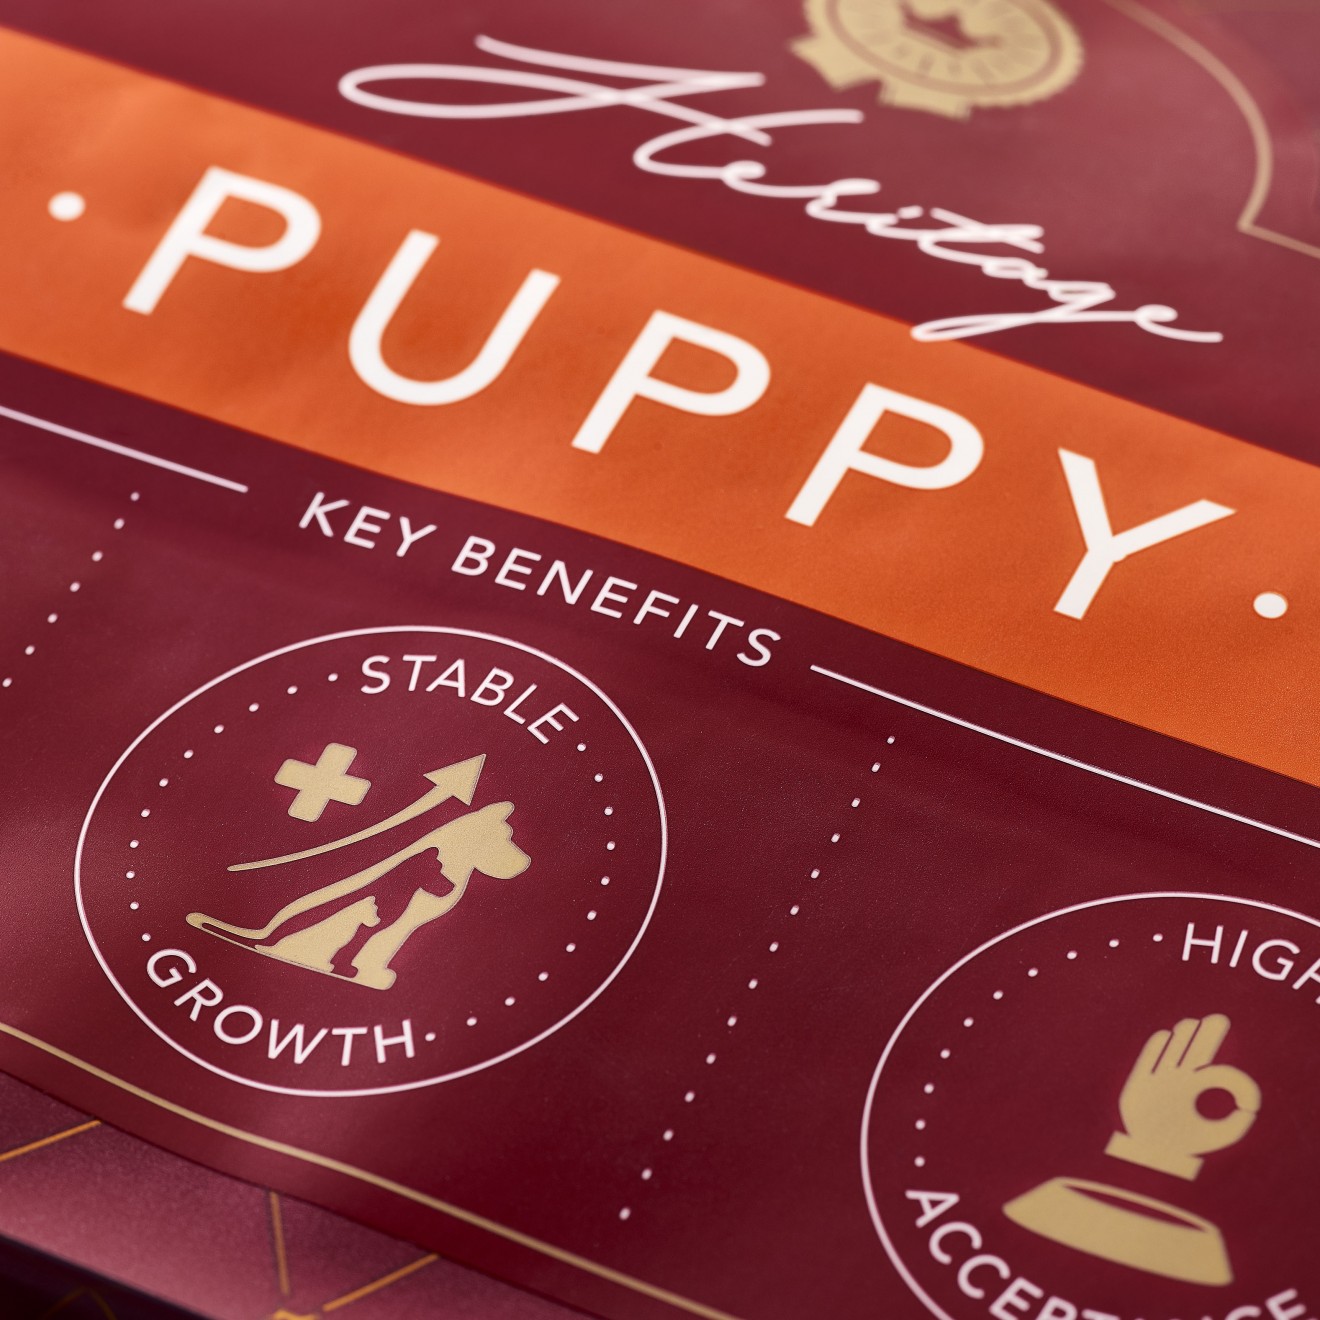 Quatre Mains package design - puppy, claims